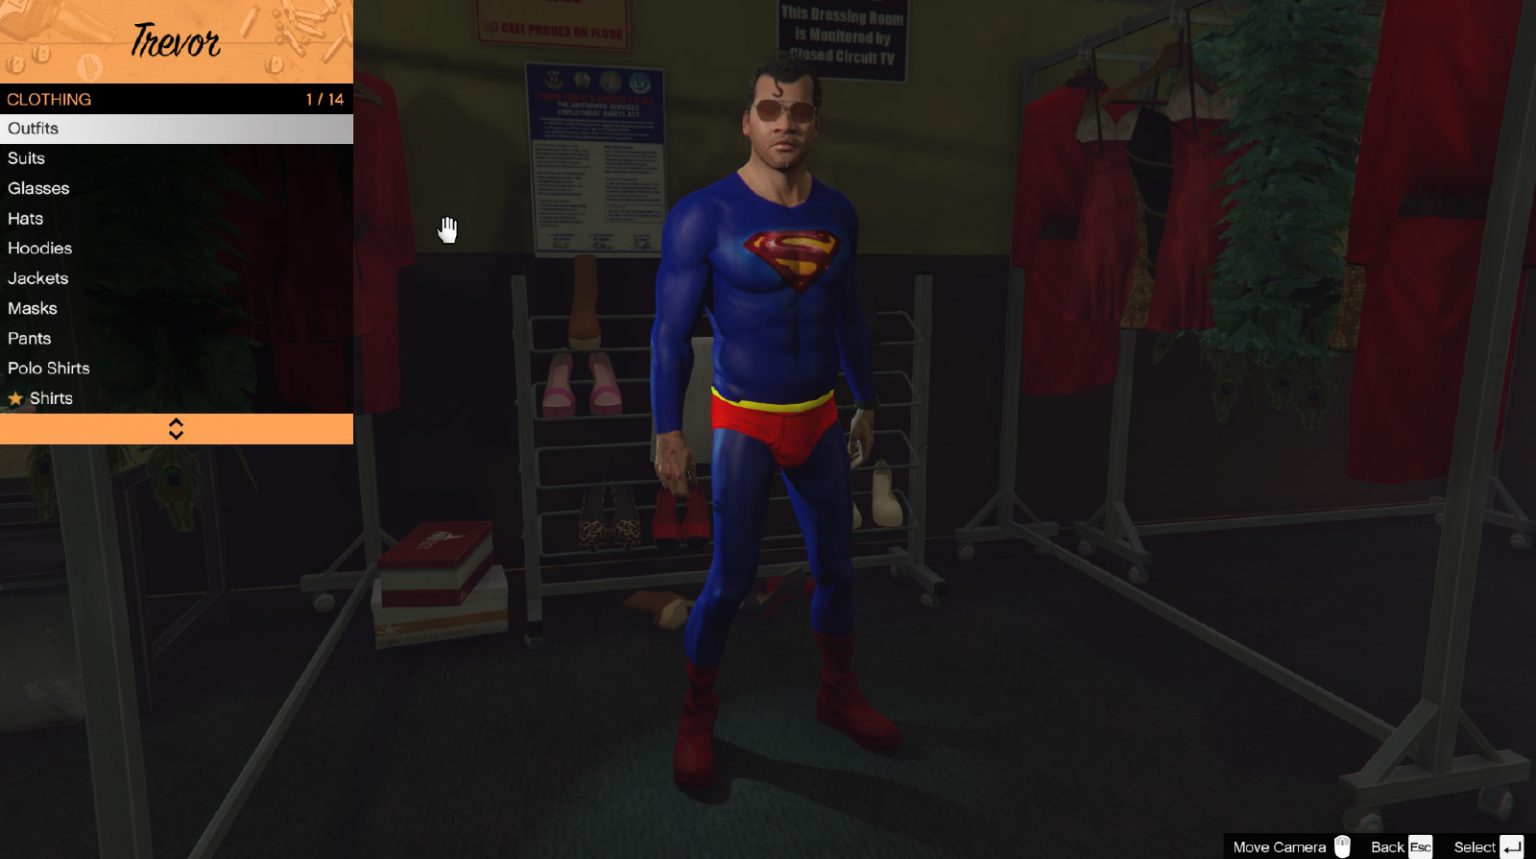 gta 5 superman powers mod